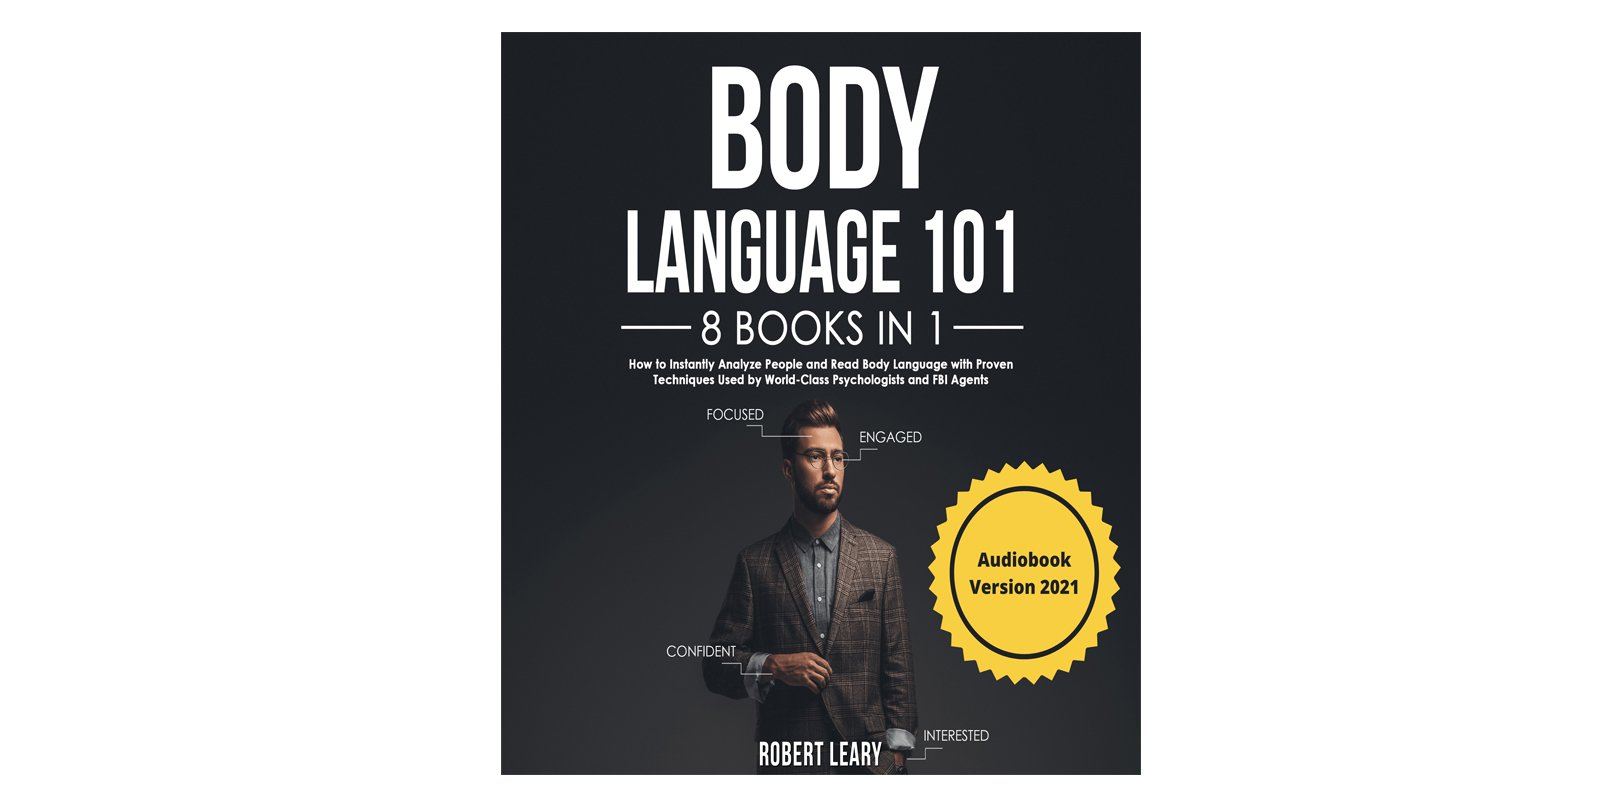 Body Language 101 Reviews